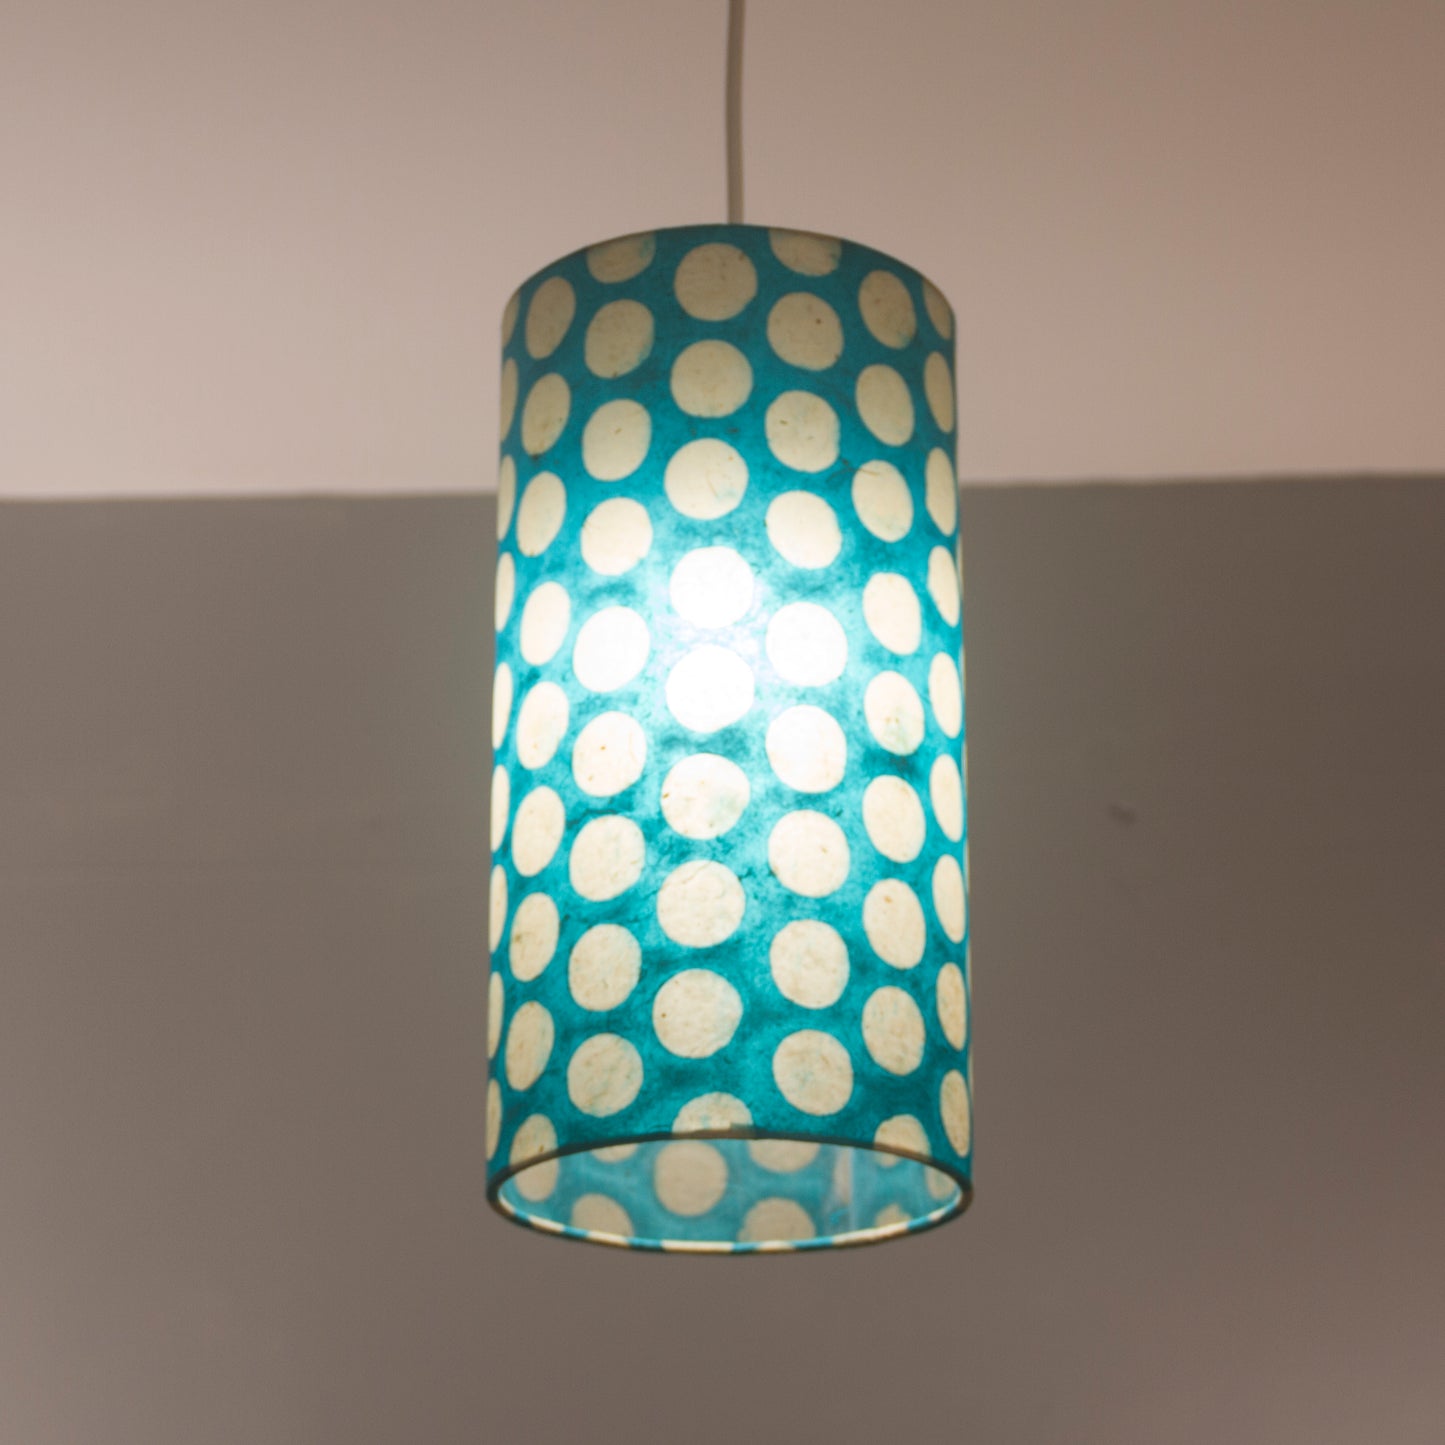 Conical Lamp Shade P97 - Batik Dots on Cyan, 15cm(top) x 30cm(bottom) x 22cm(height)